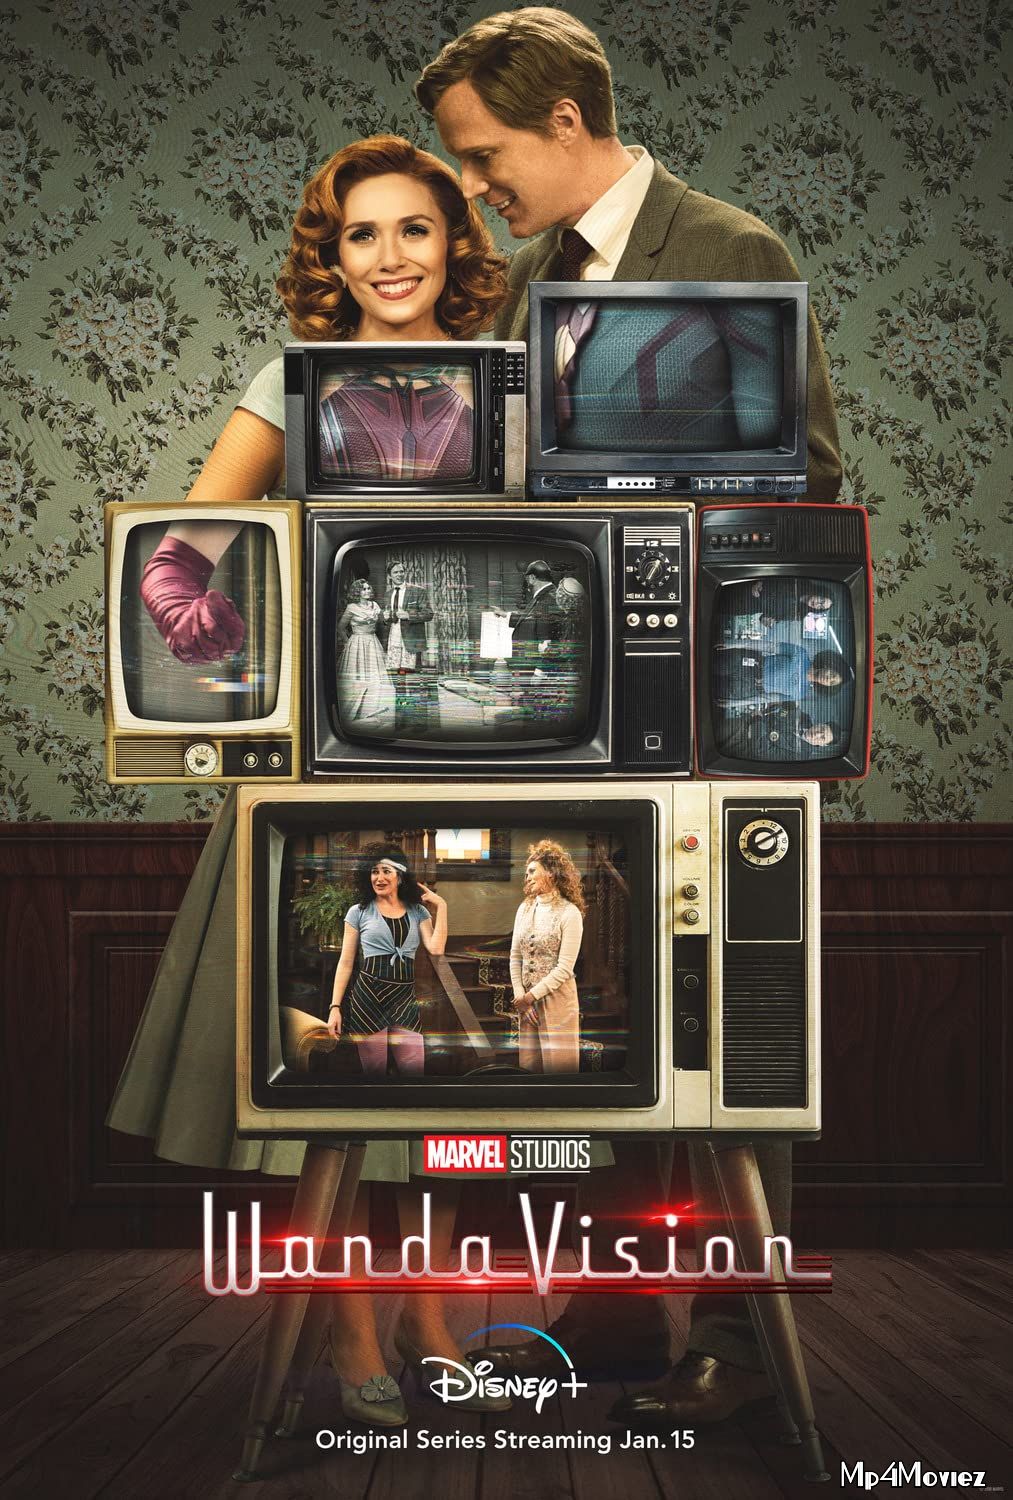 WandaVision (2021) Season 1 (Episode 1) Full Movie download full movie